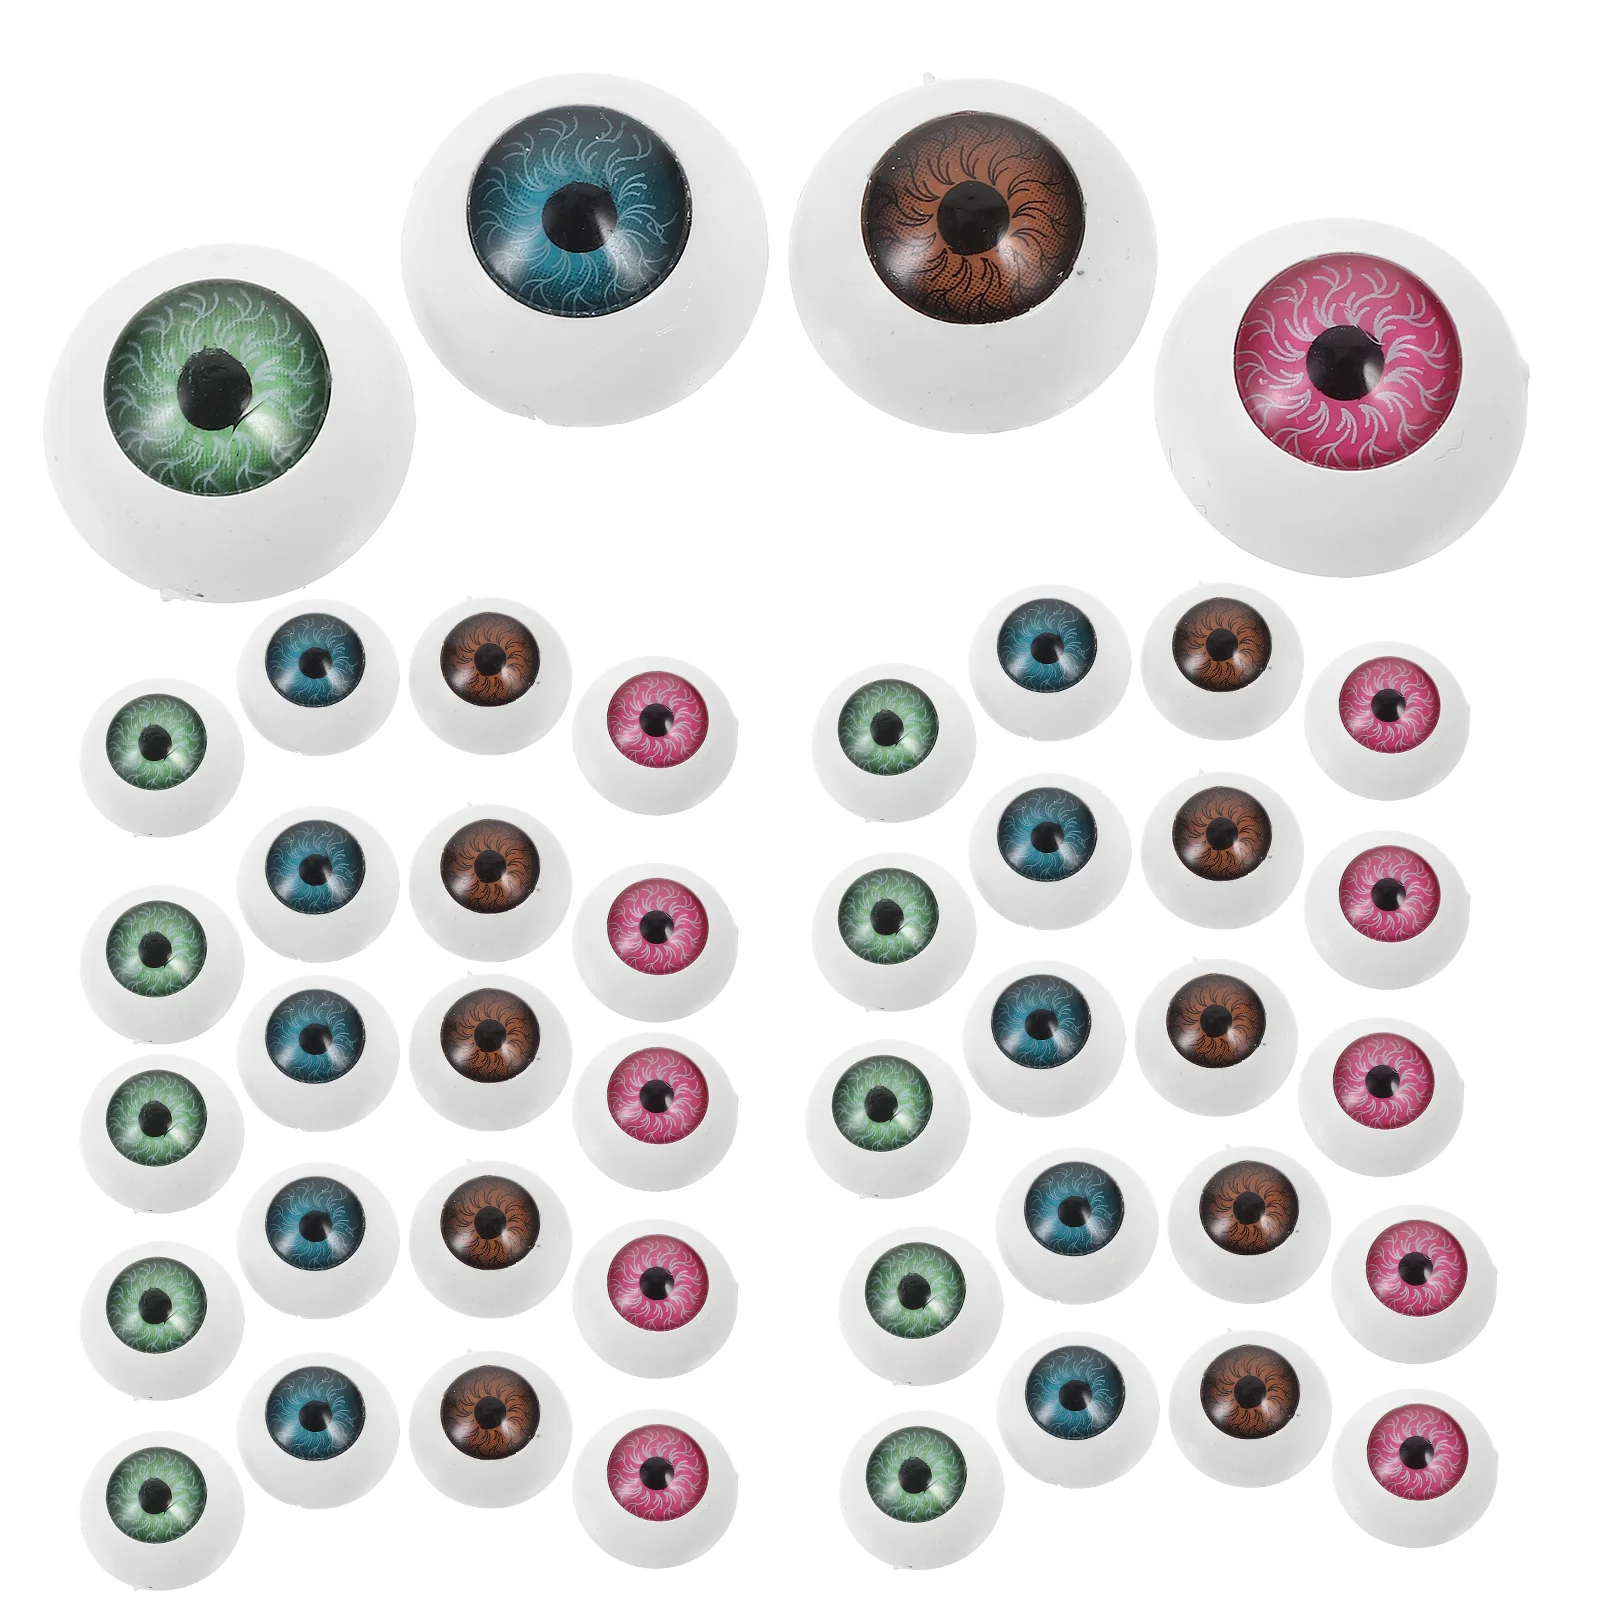 

40 Pcs Halloween Toys Fake Eyes Eyeball Props Party Accessory Portable Eyeballs Acrylic Horror Gathering Playing